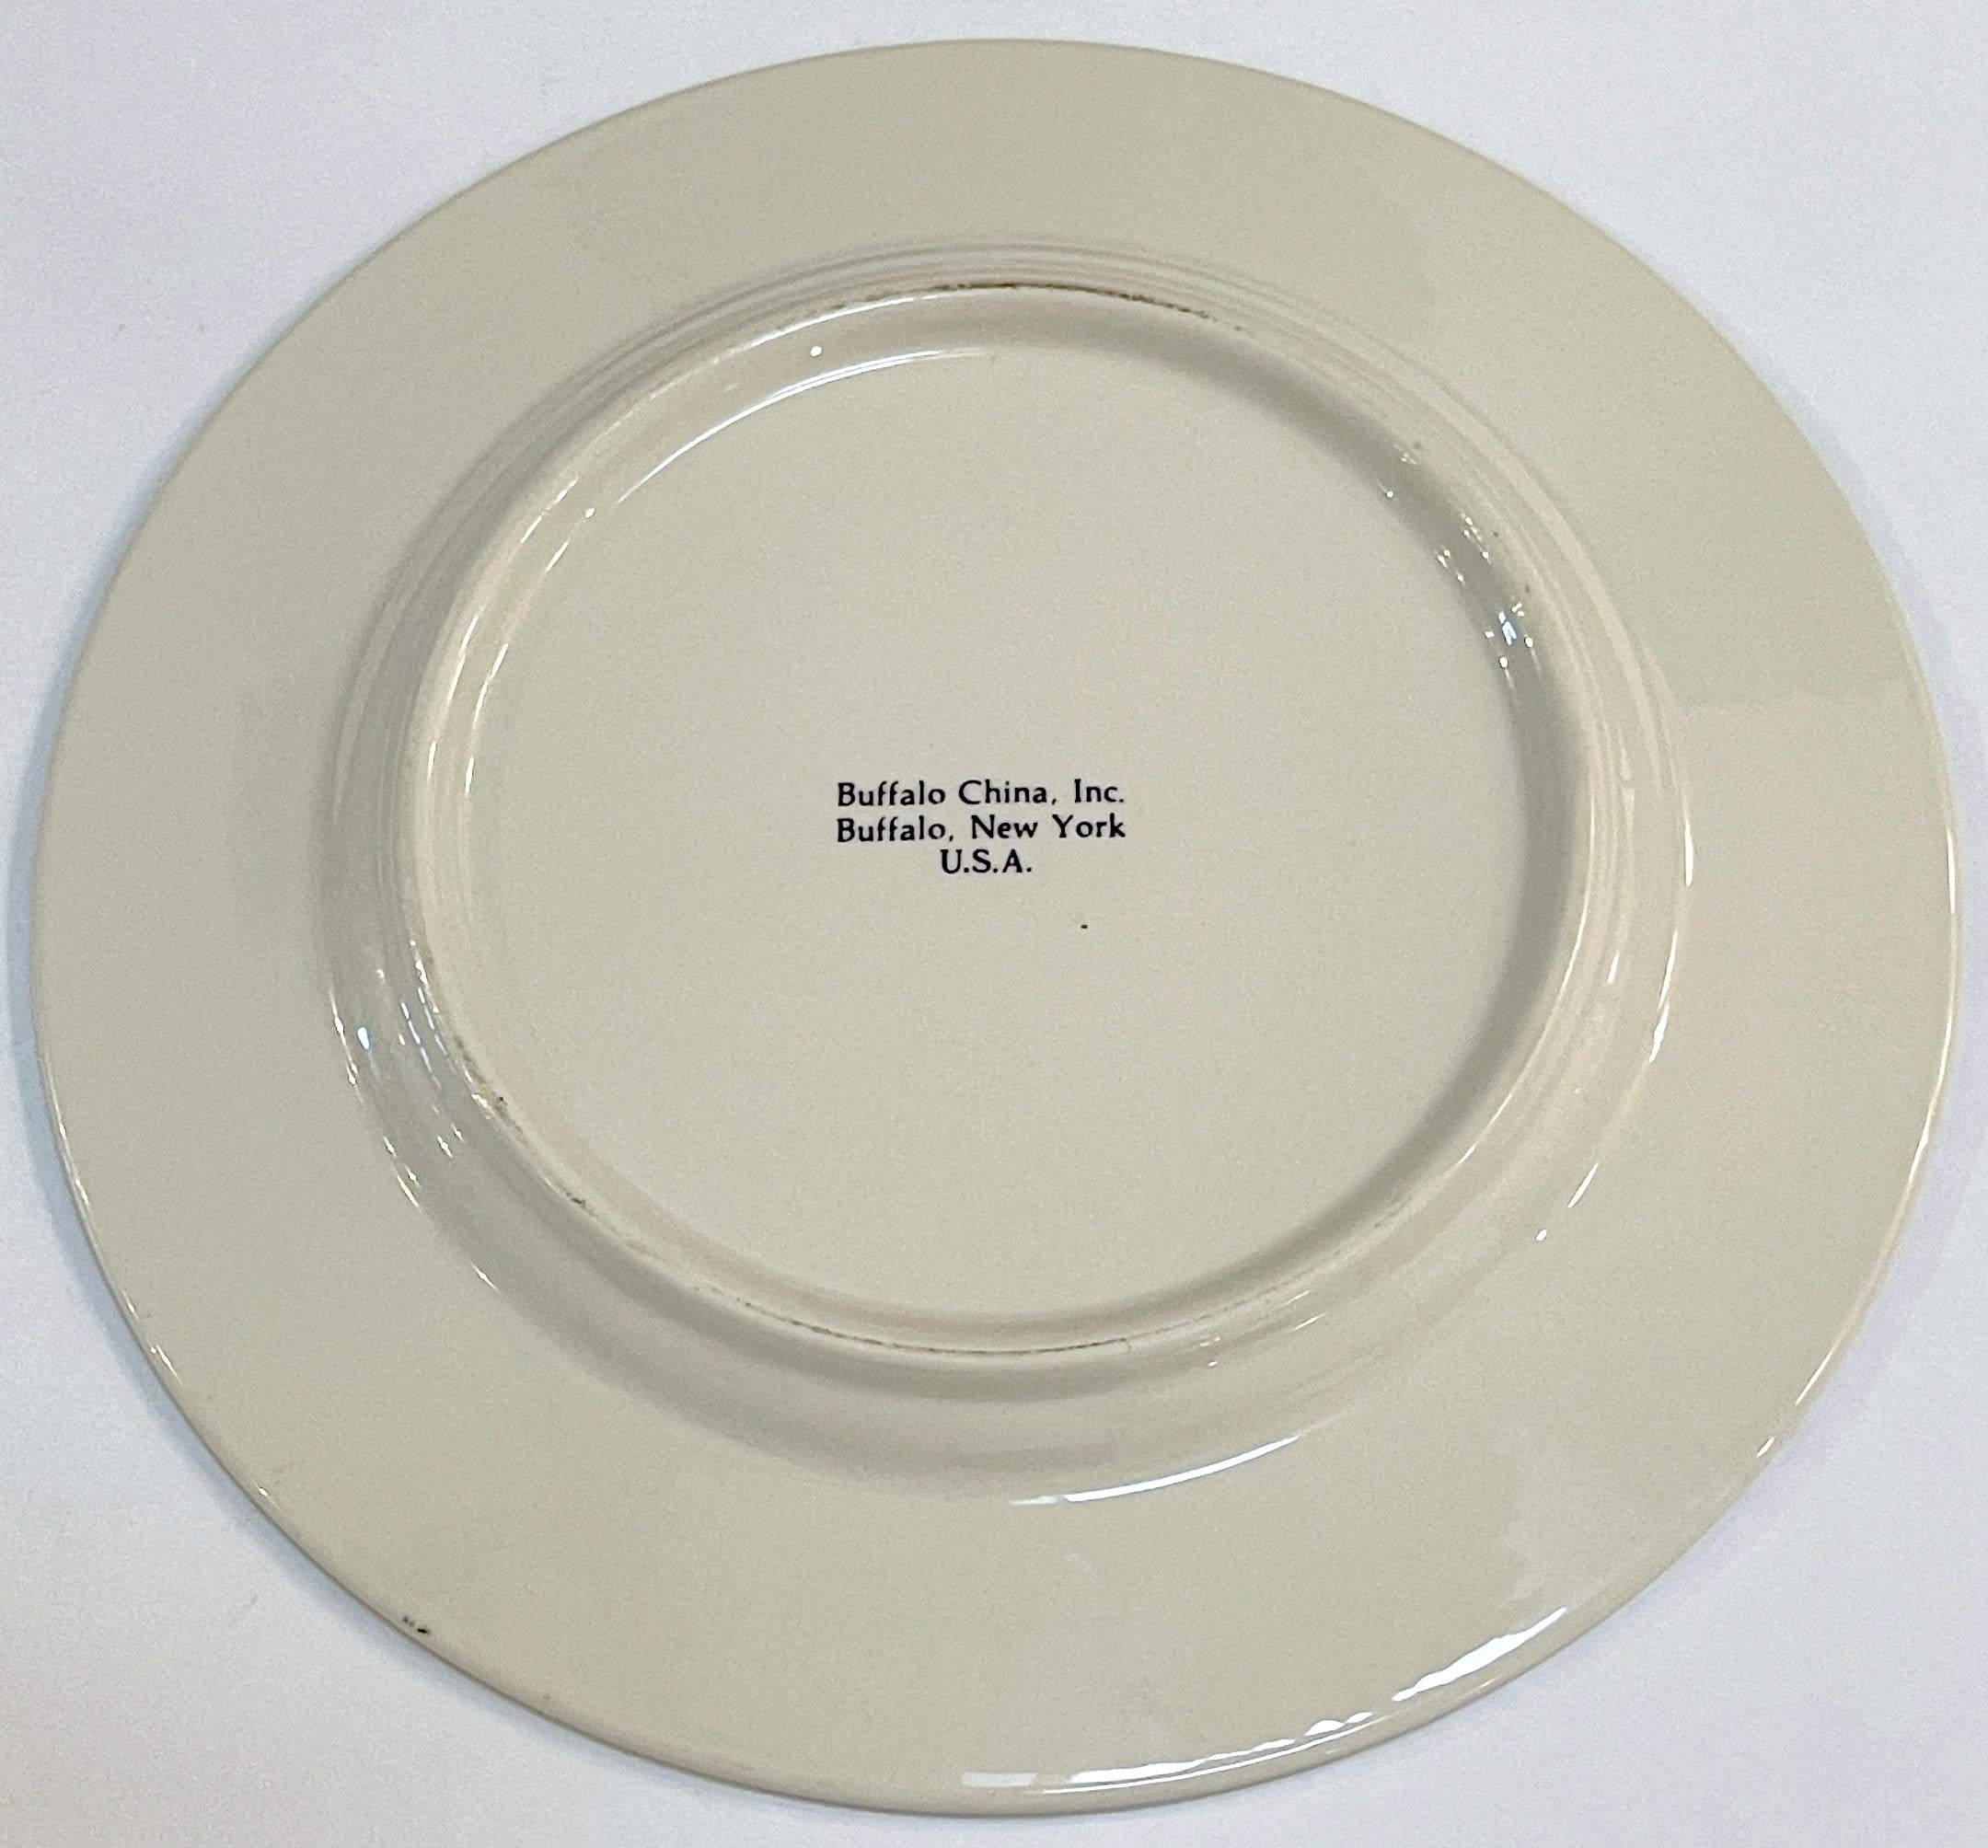 12 Polo Motif Dinner Plates, Buffalo China for Palm Beach Polo Club For Sale 1